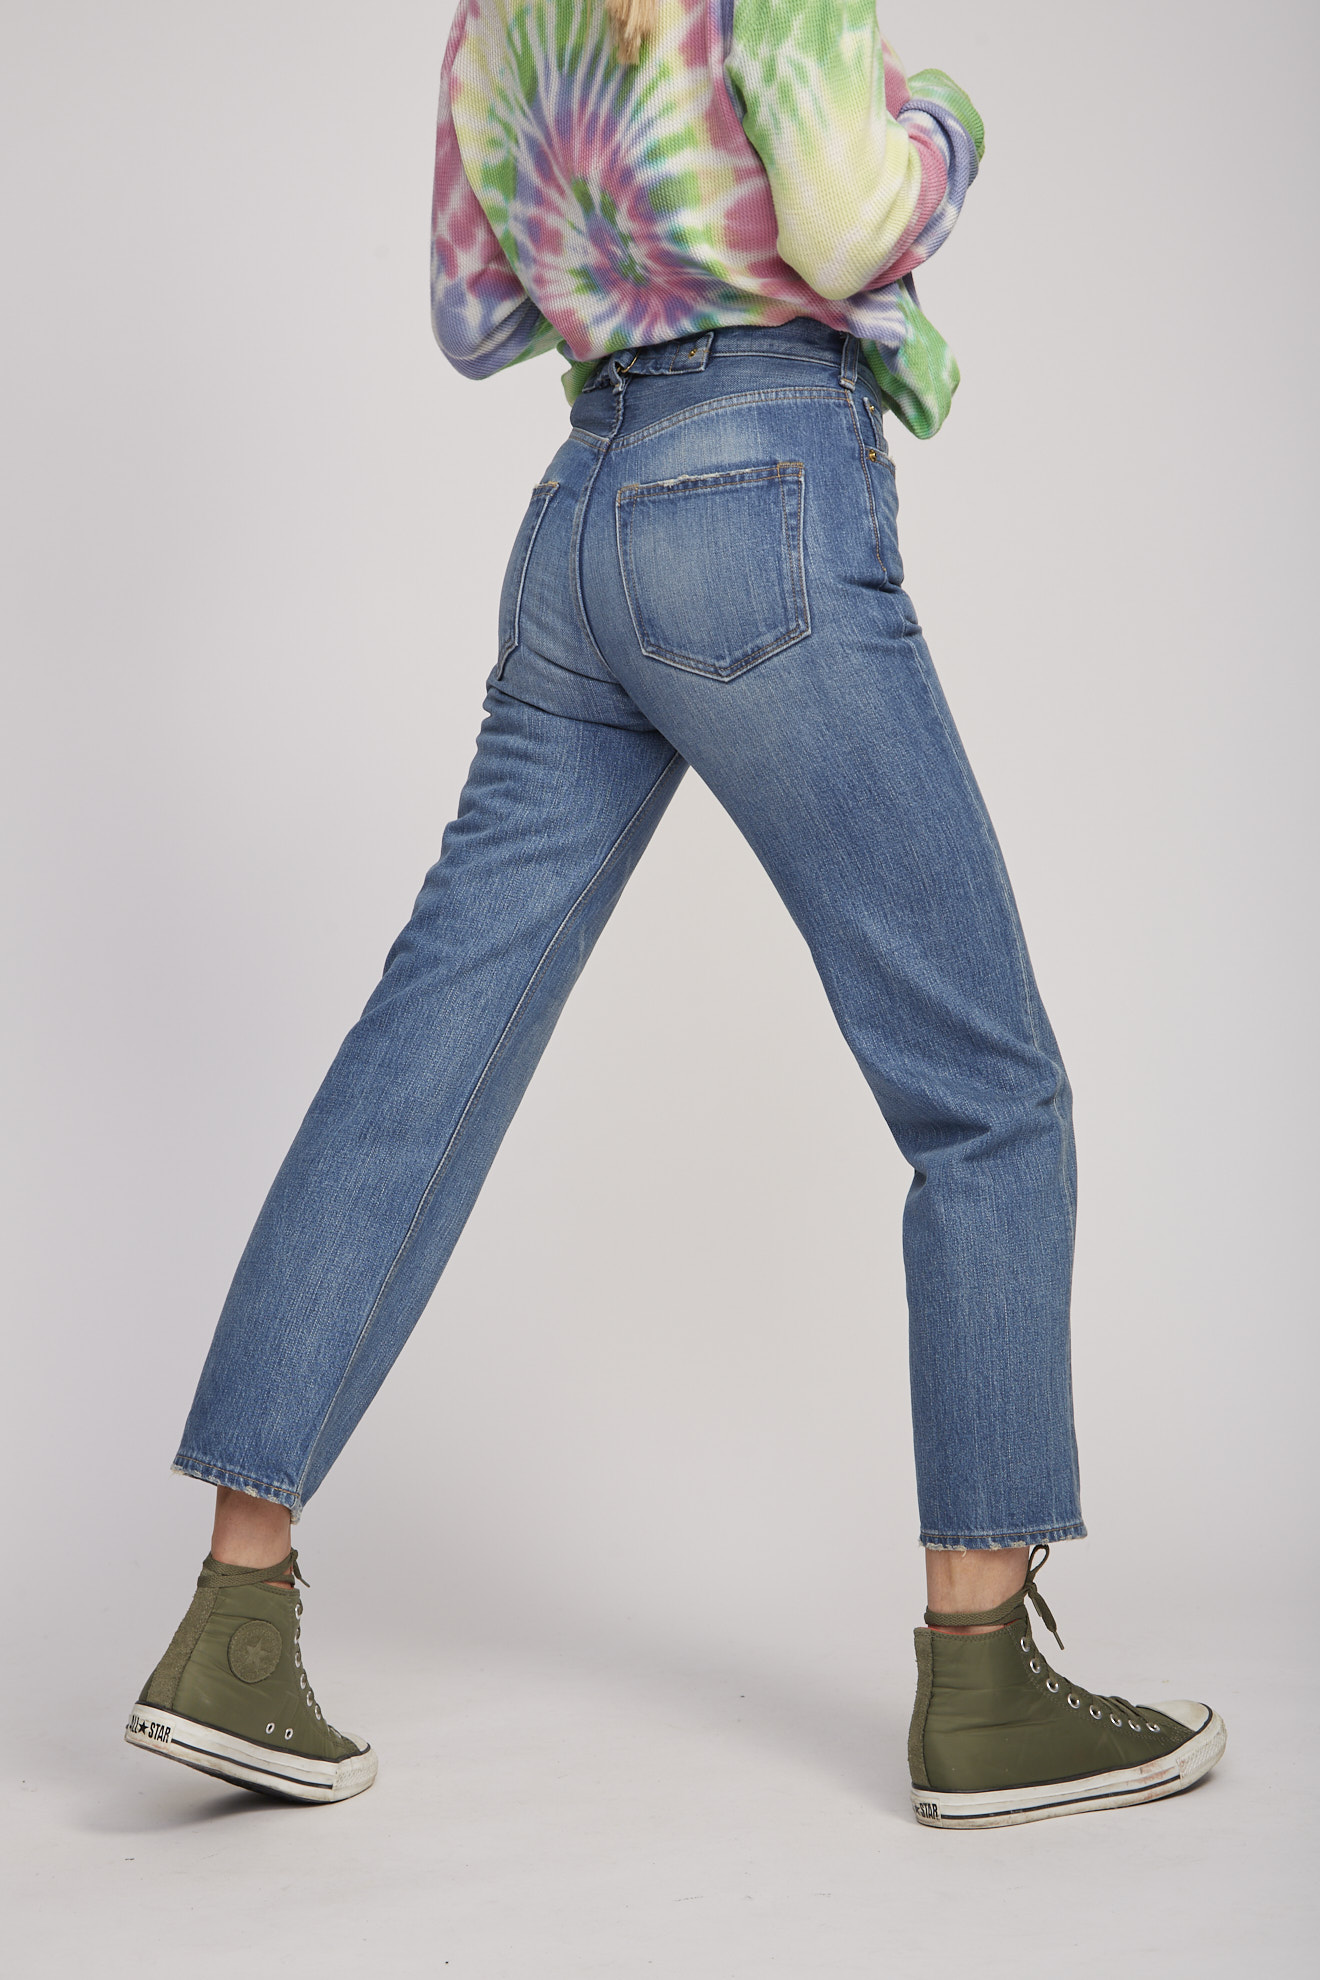 tuesmontresor jeans blue plain jeans model back